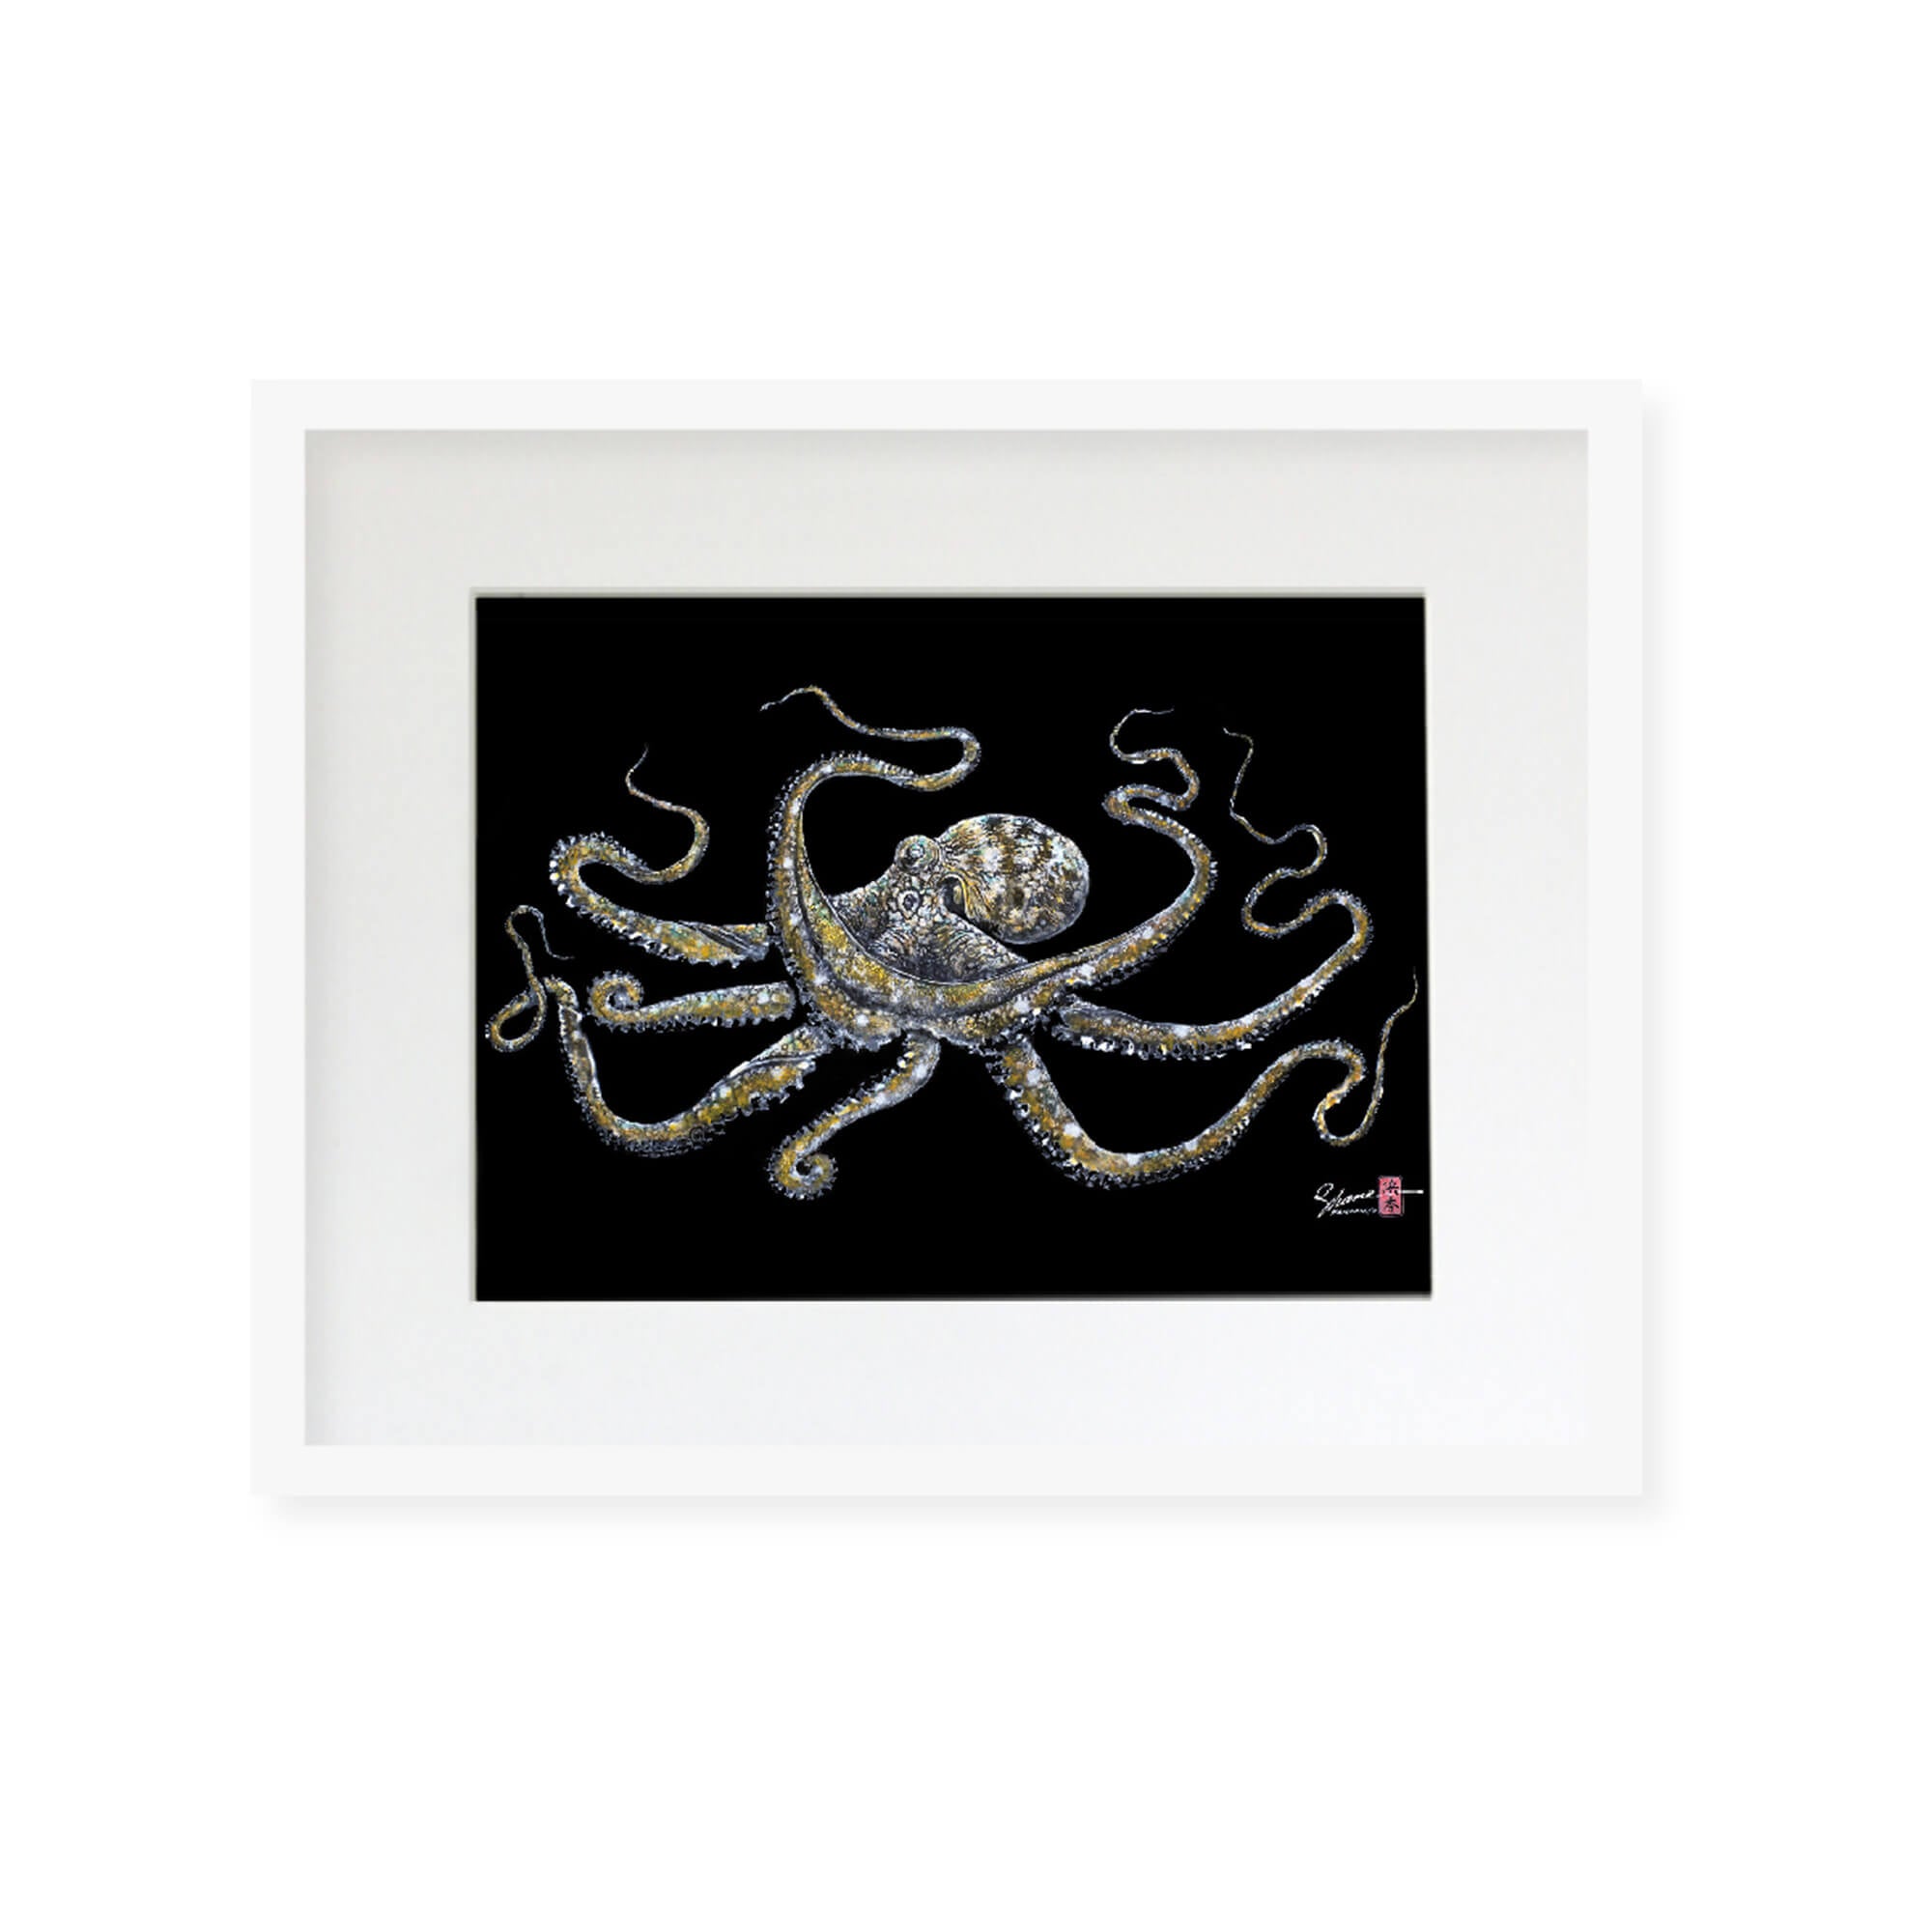 Framed matted print of Tako (octopus) by Hawaii gyotaku artist Shane Hamamoto